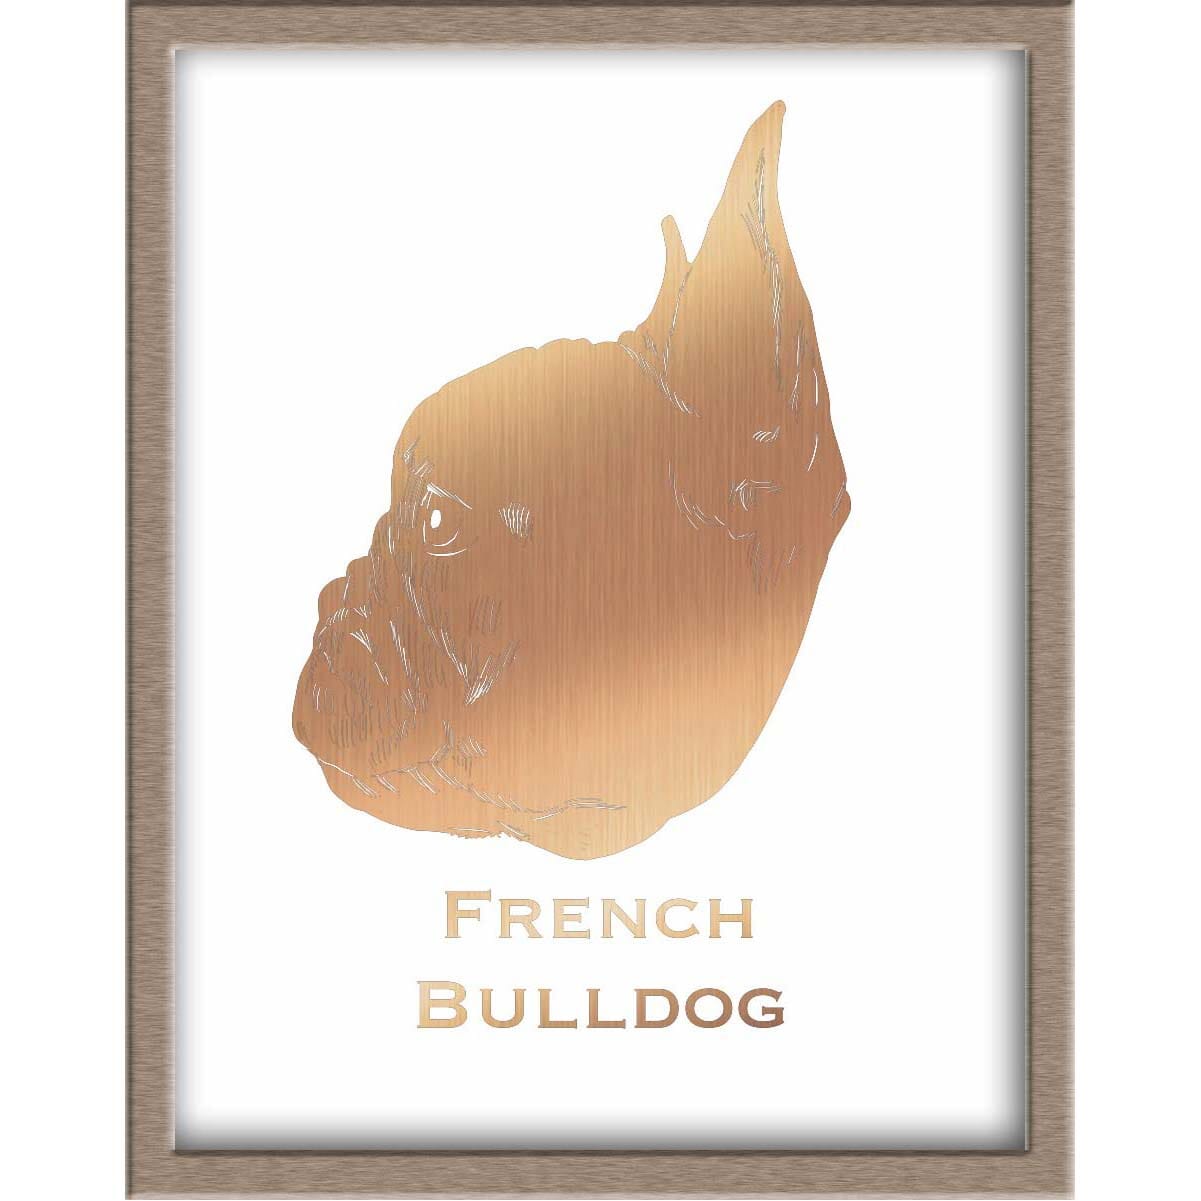 French Bulldog Silhouette Foiled Print Posters, Prints, & Visual Artwork JoyousJoyfulJoyness 